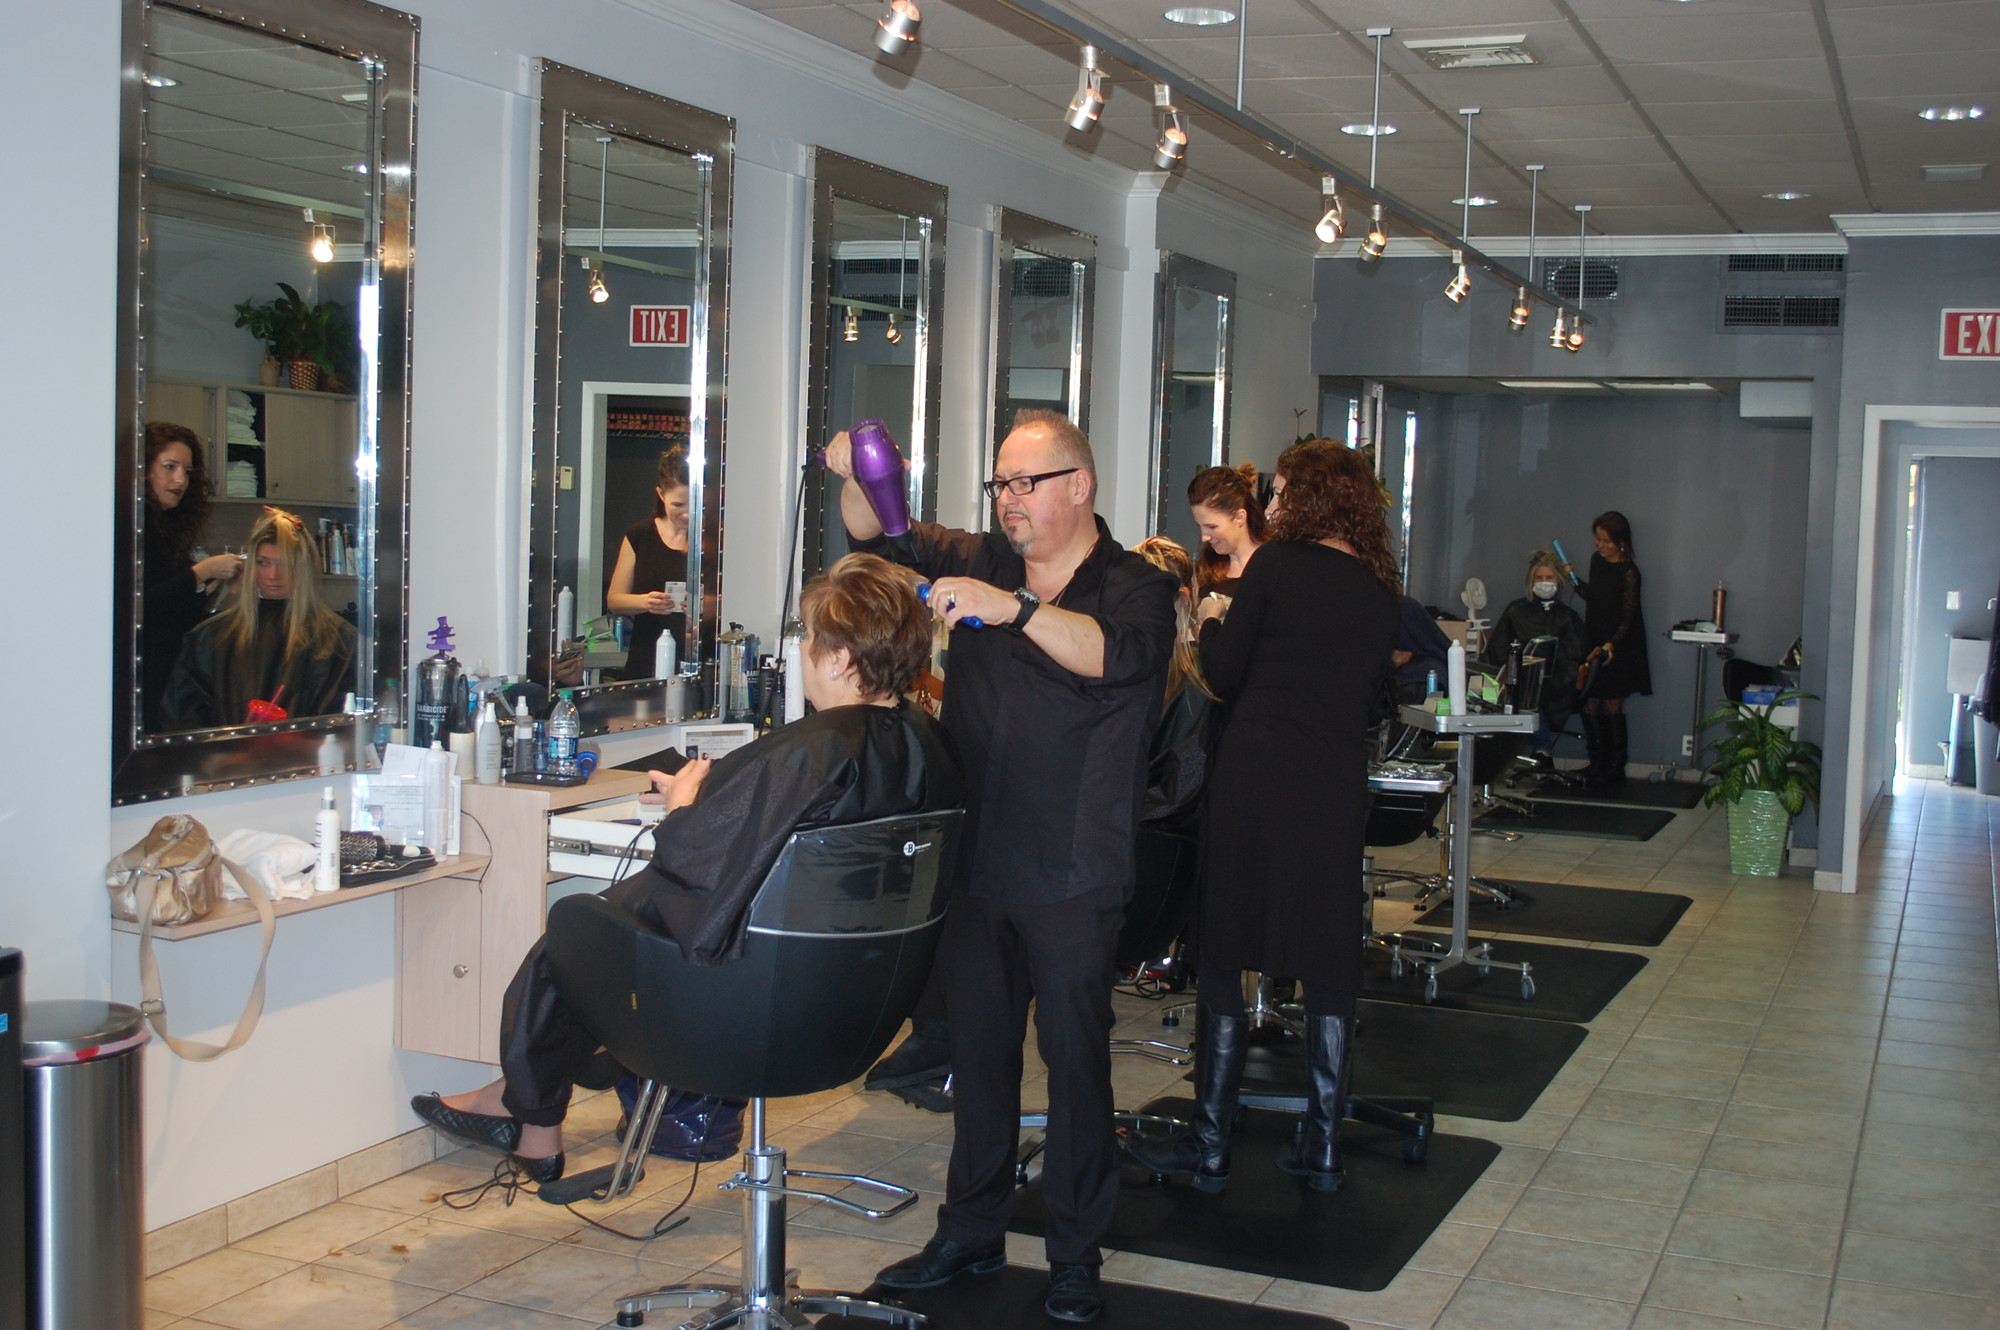 Platinum Hair and COlour Studio is at 3898 Merrick Road.